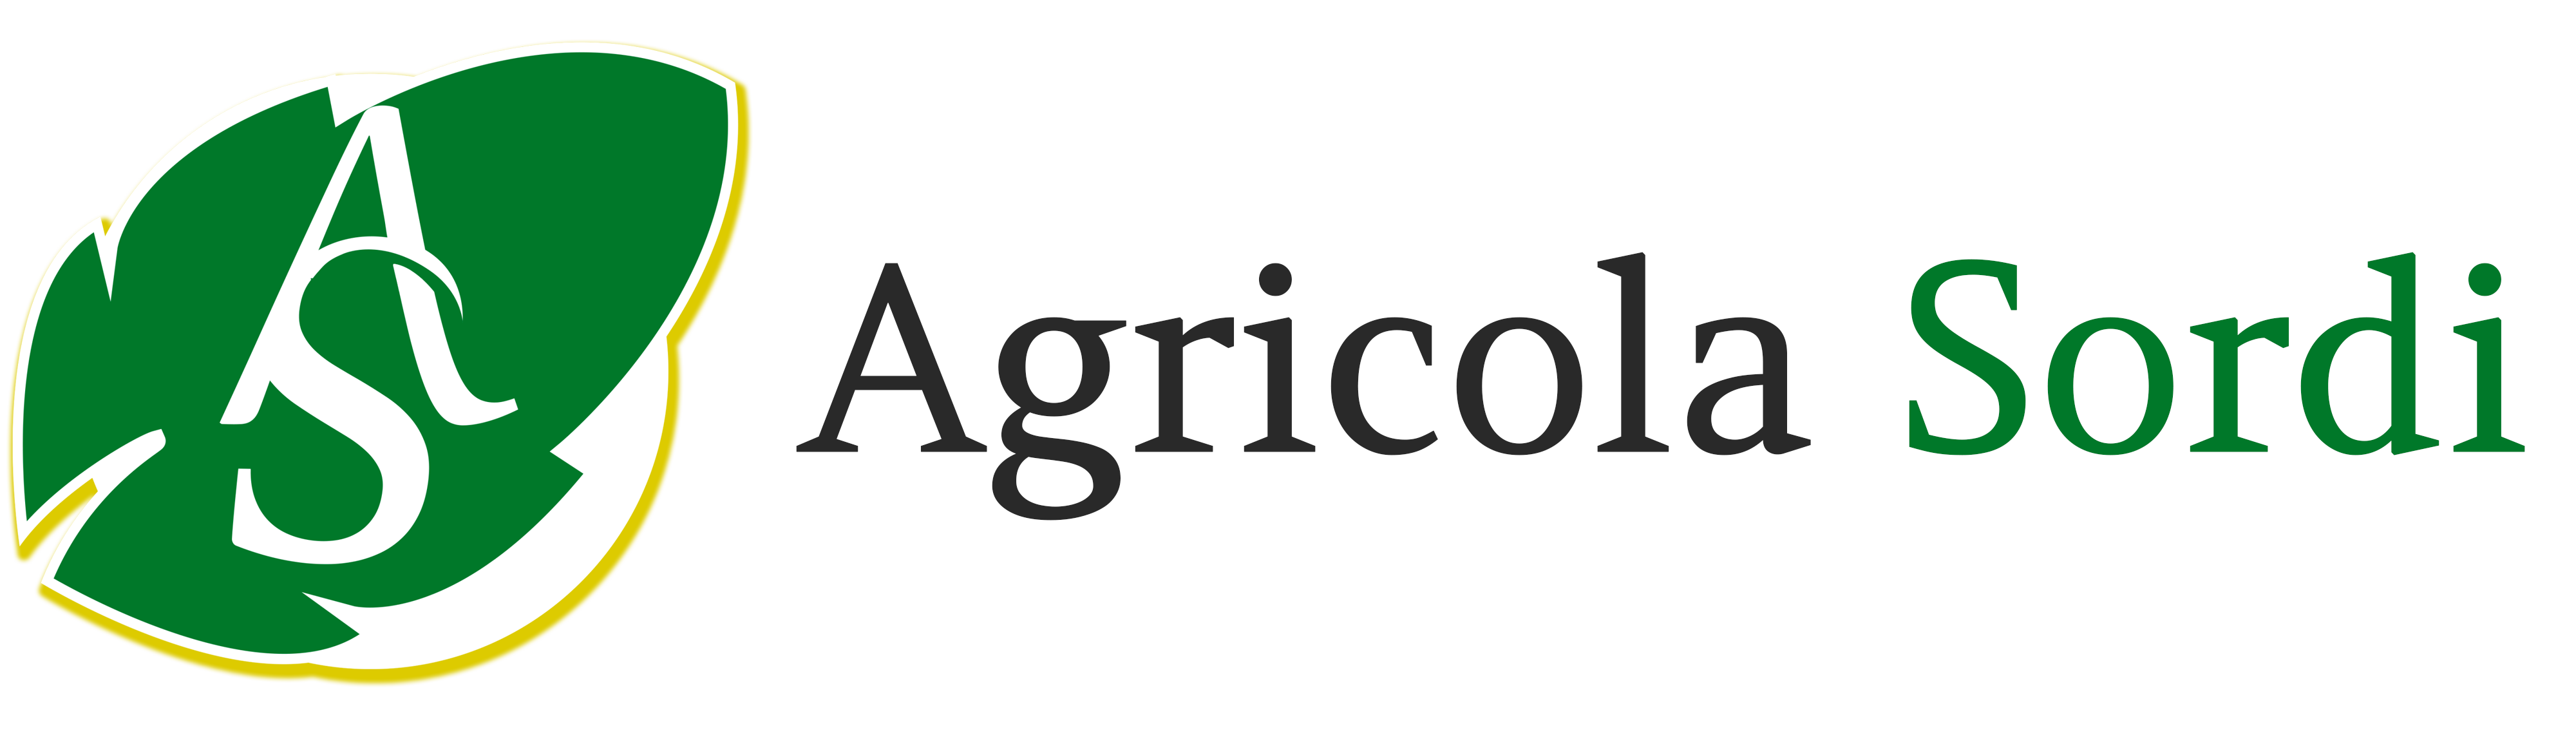 Agricola Sordi